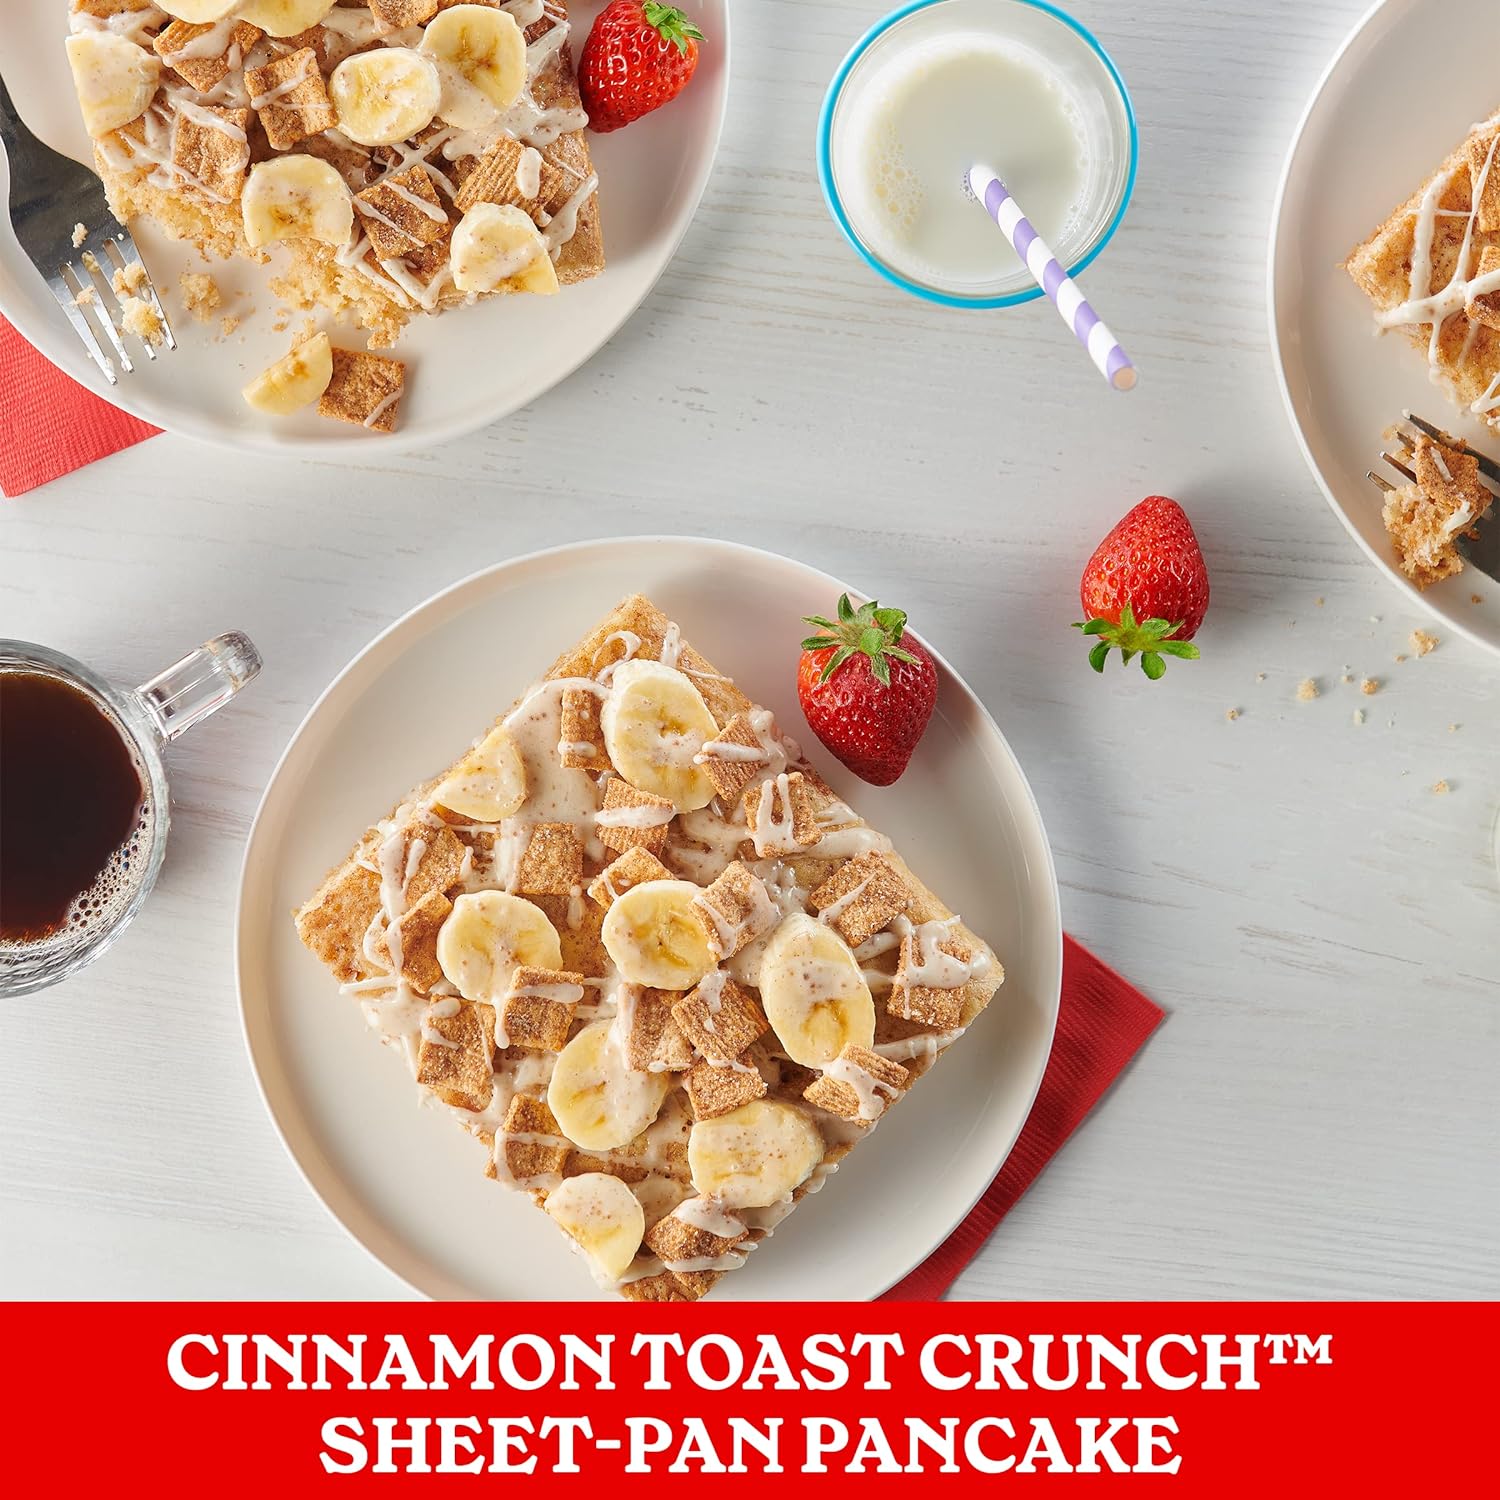 Betty Crocker Cinnamon Toast Crunch Pancake Kit, Baking Mix, 15.6 oz. : Everything Else